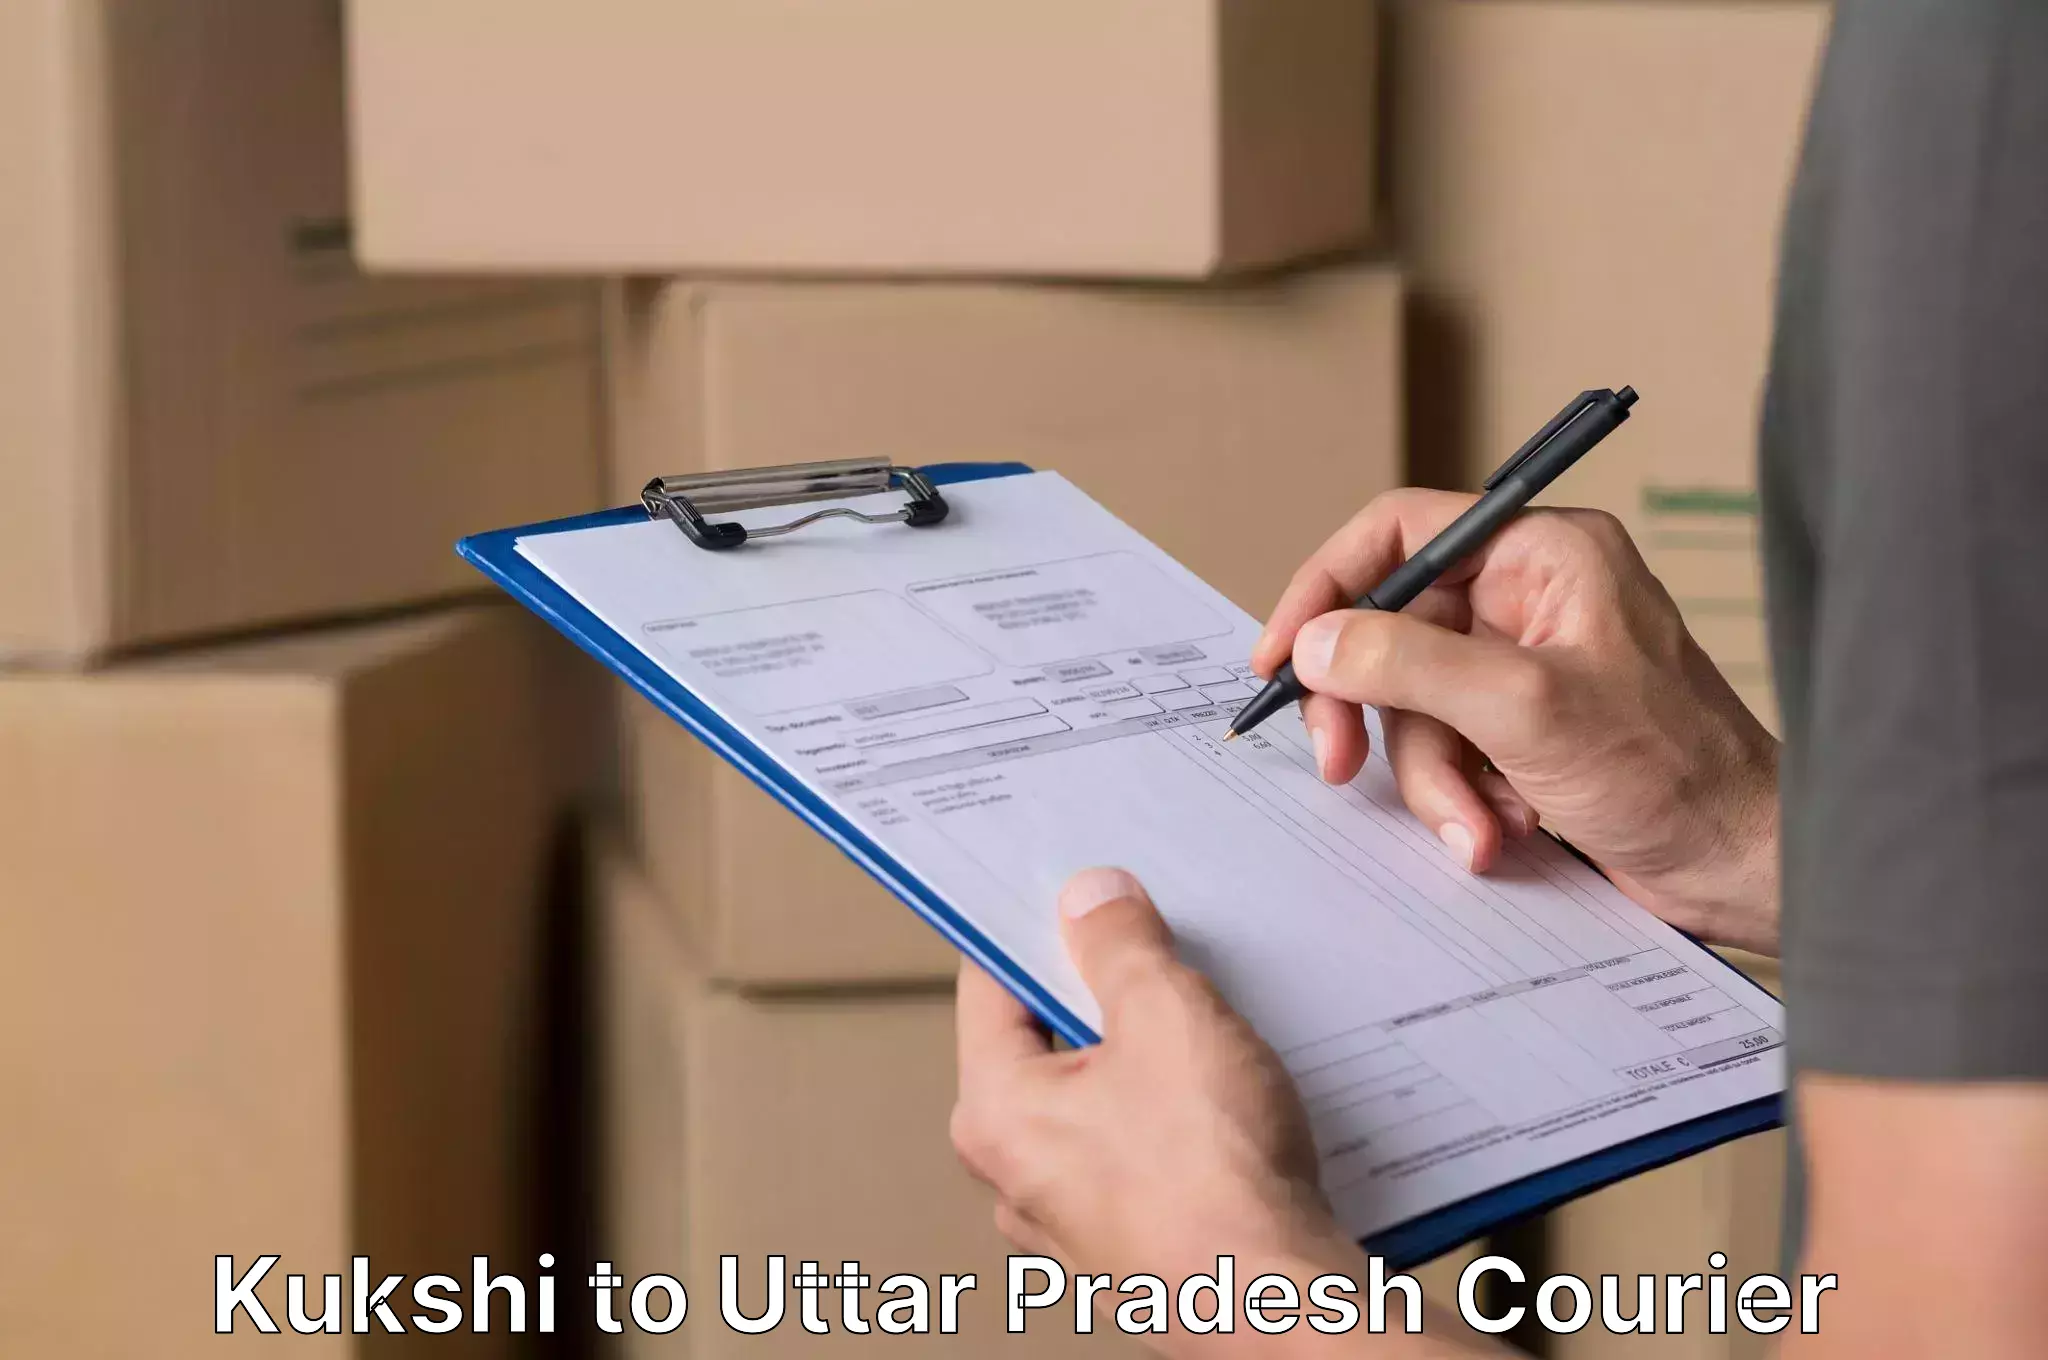 Furniture relocation experts Kukshi to Uttar Pradesh